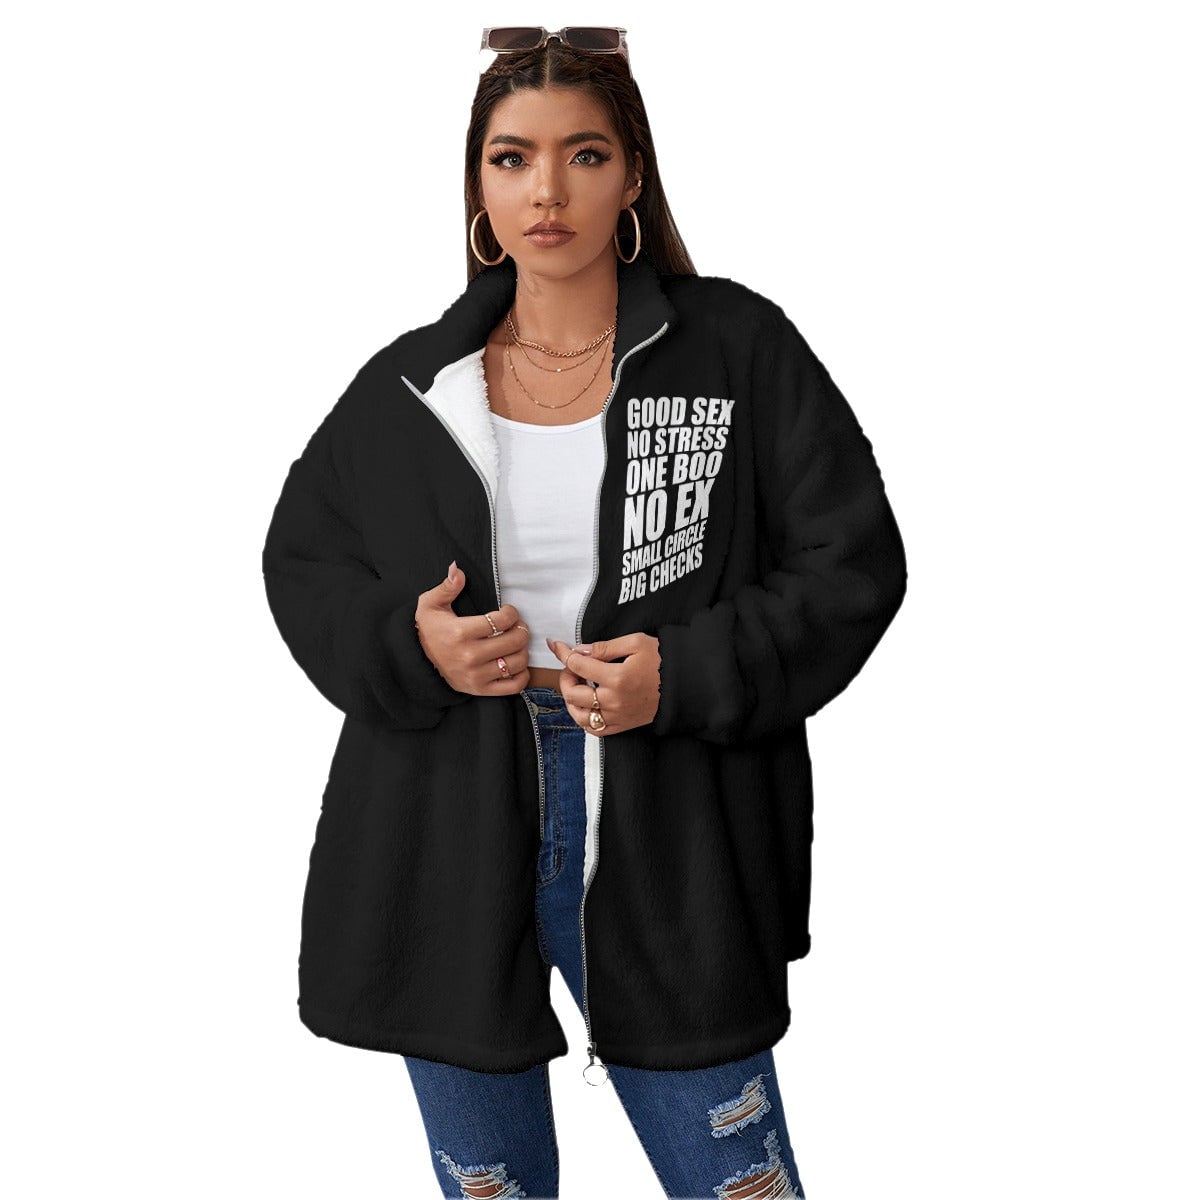 No stress One Boo Small Circle Women’s Borg Fleece Oversize Jacket